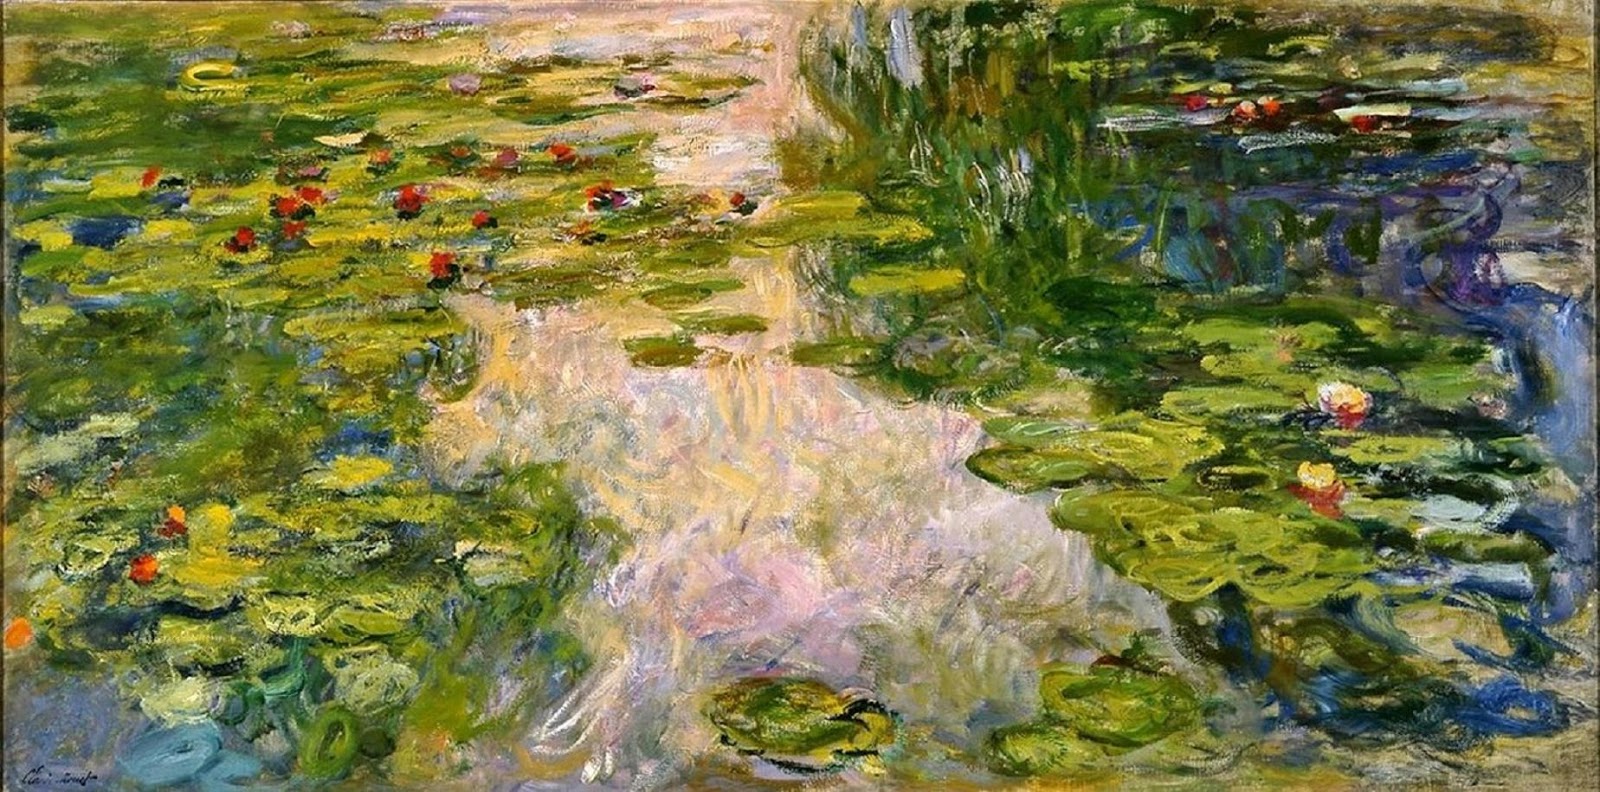 Claude+Monet-1840-1926 (414).jpg